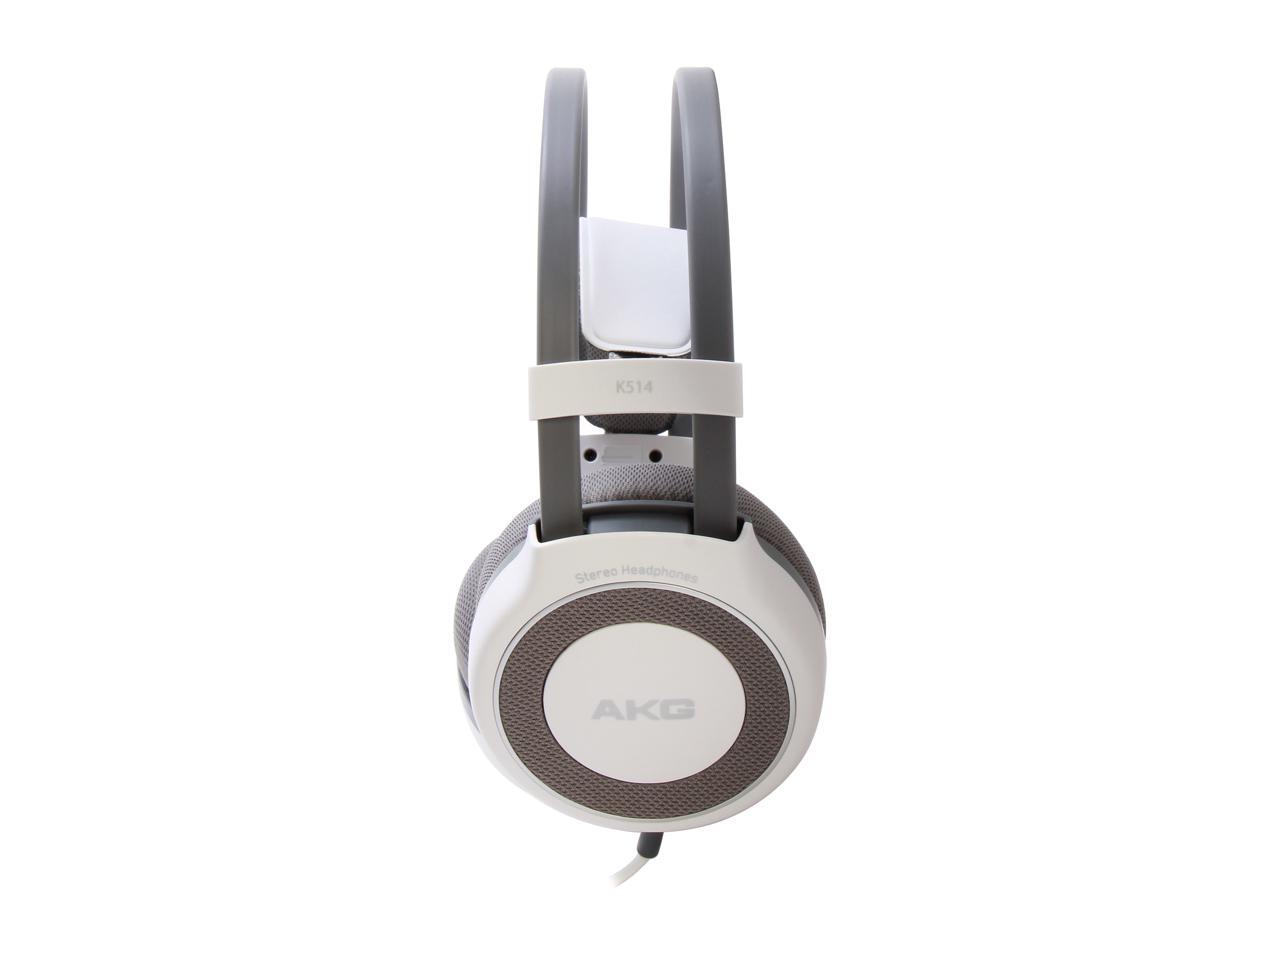 Huiskamer weigeren middernacht AKG White K514 MKII On-Ear Natural Sound Stereo Headphone - Newegg.com